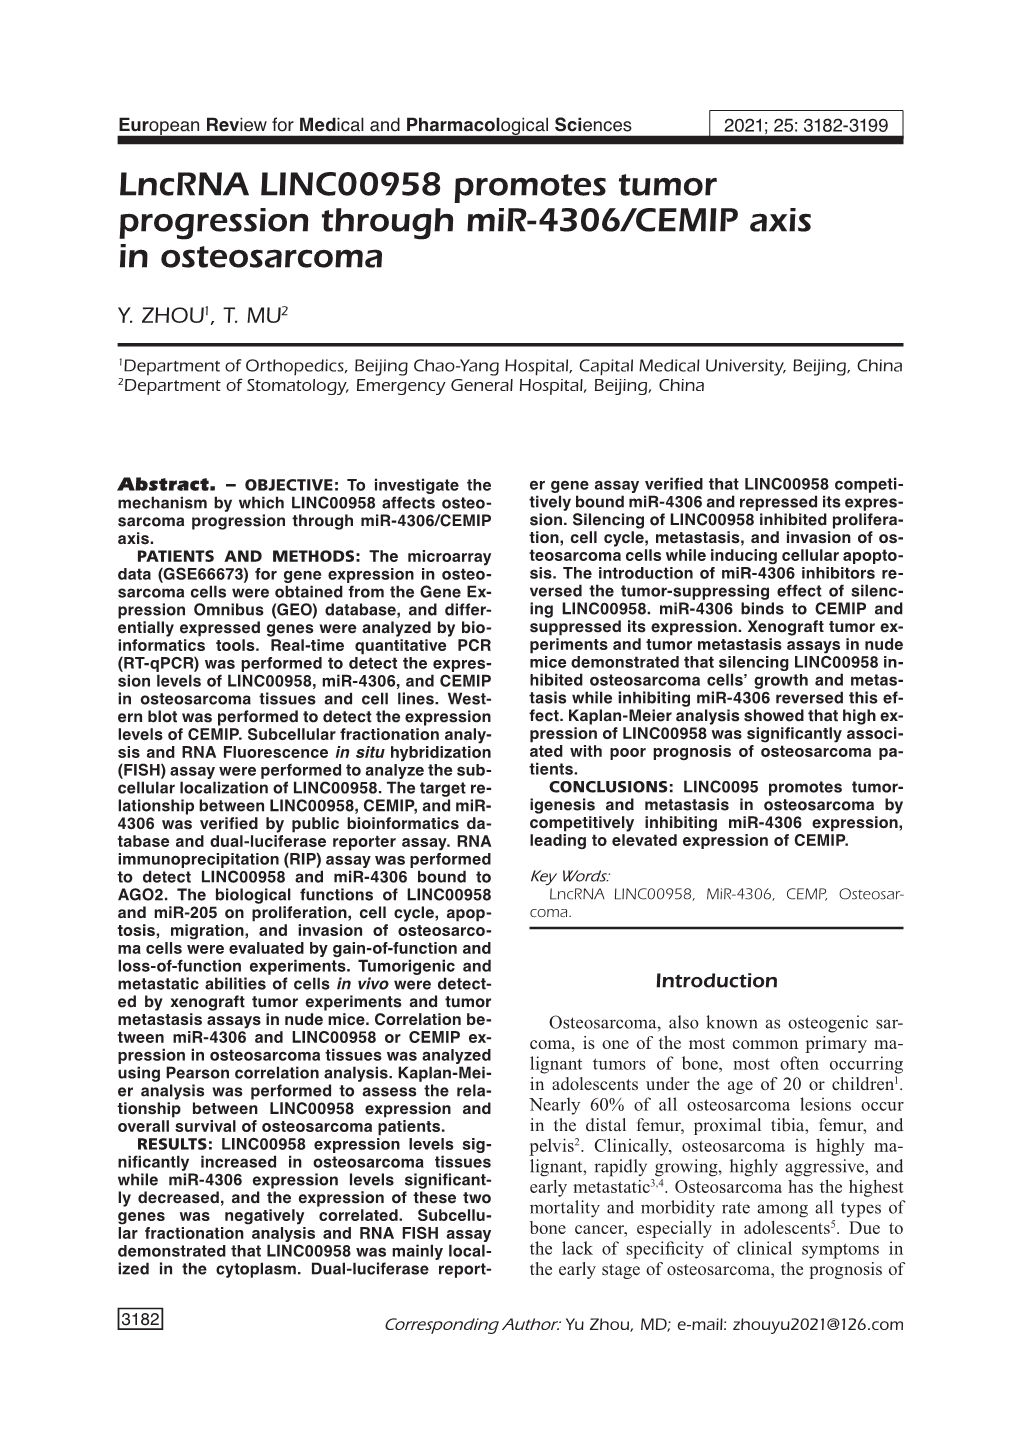 Lncrna LINC00958 Promotes Tumor Progression Through Mir-4306/CEMIP Axis in Osteosarcoma